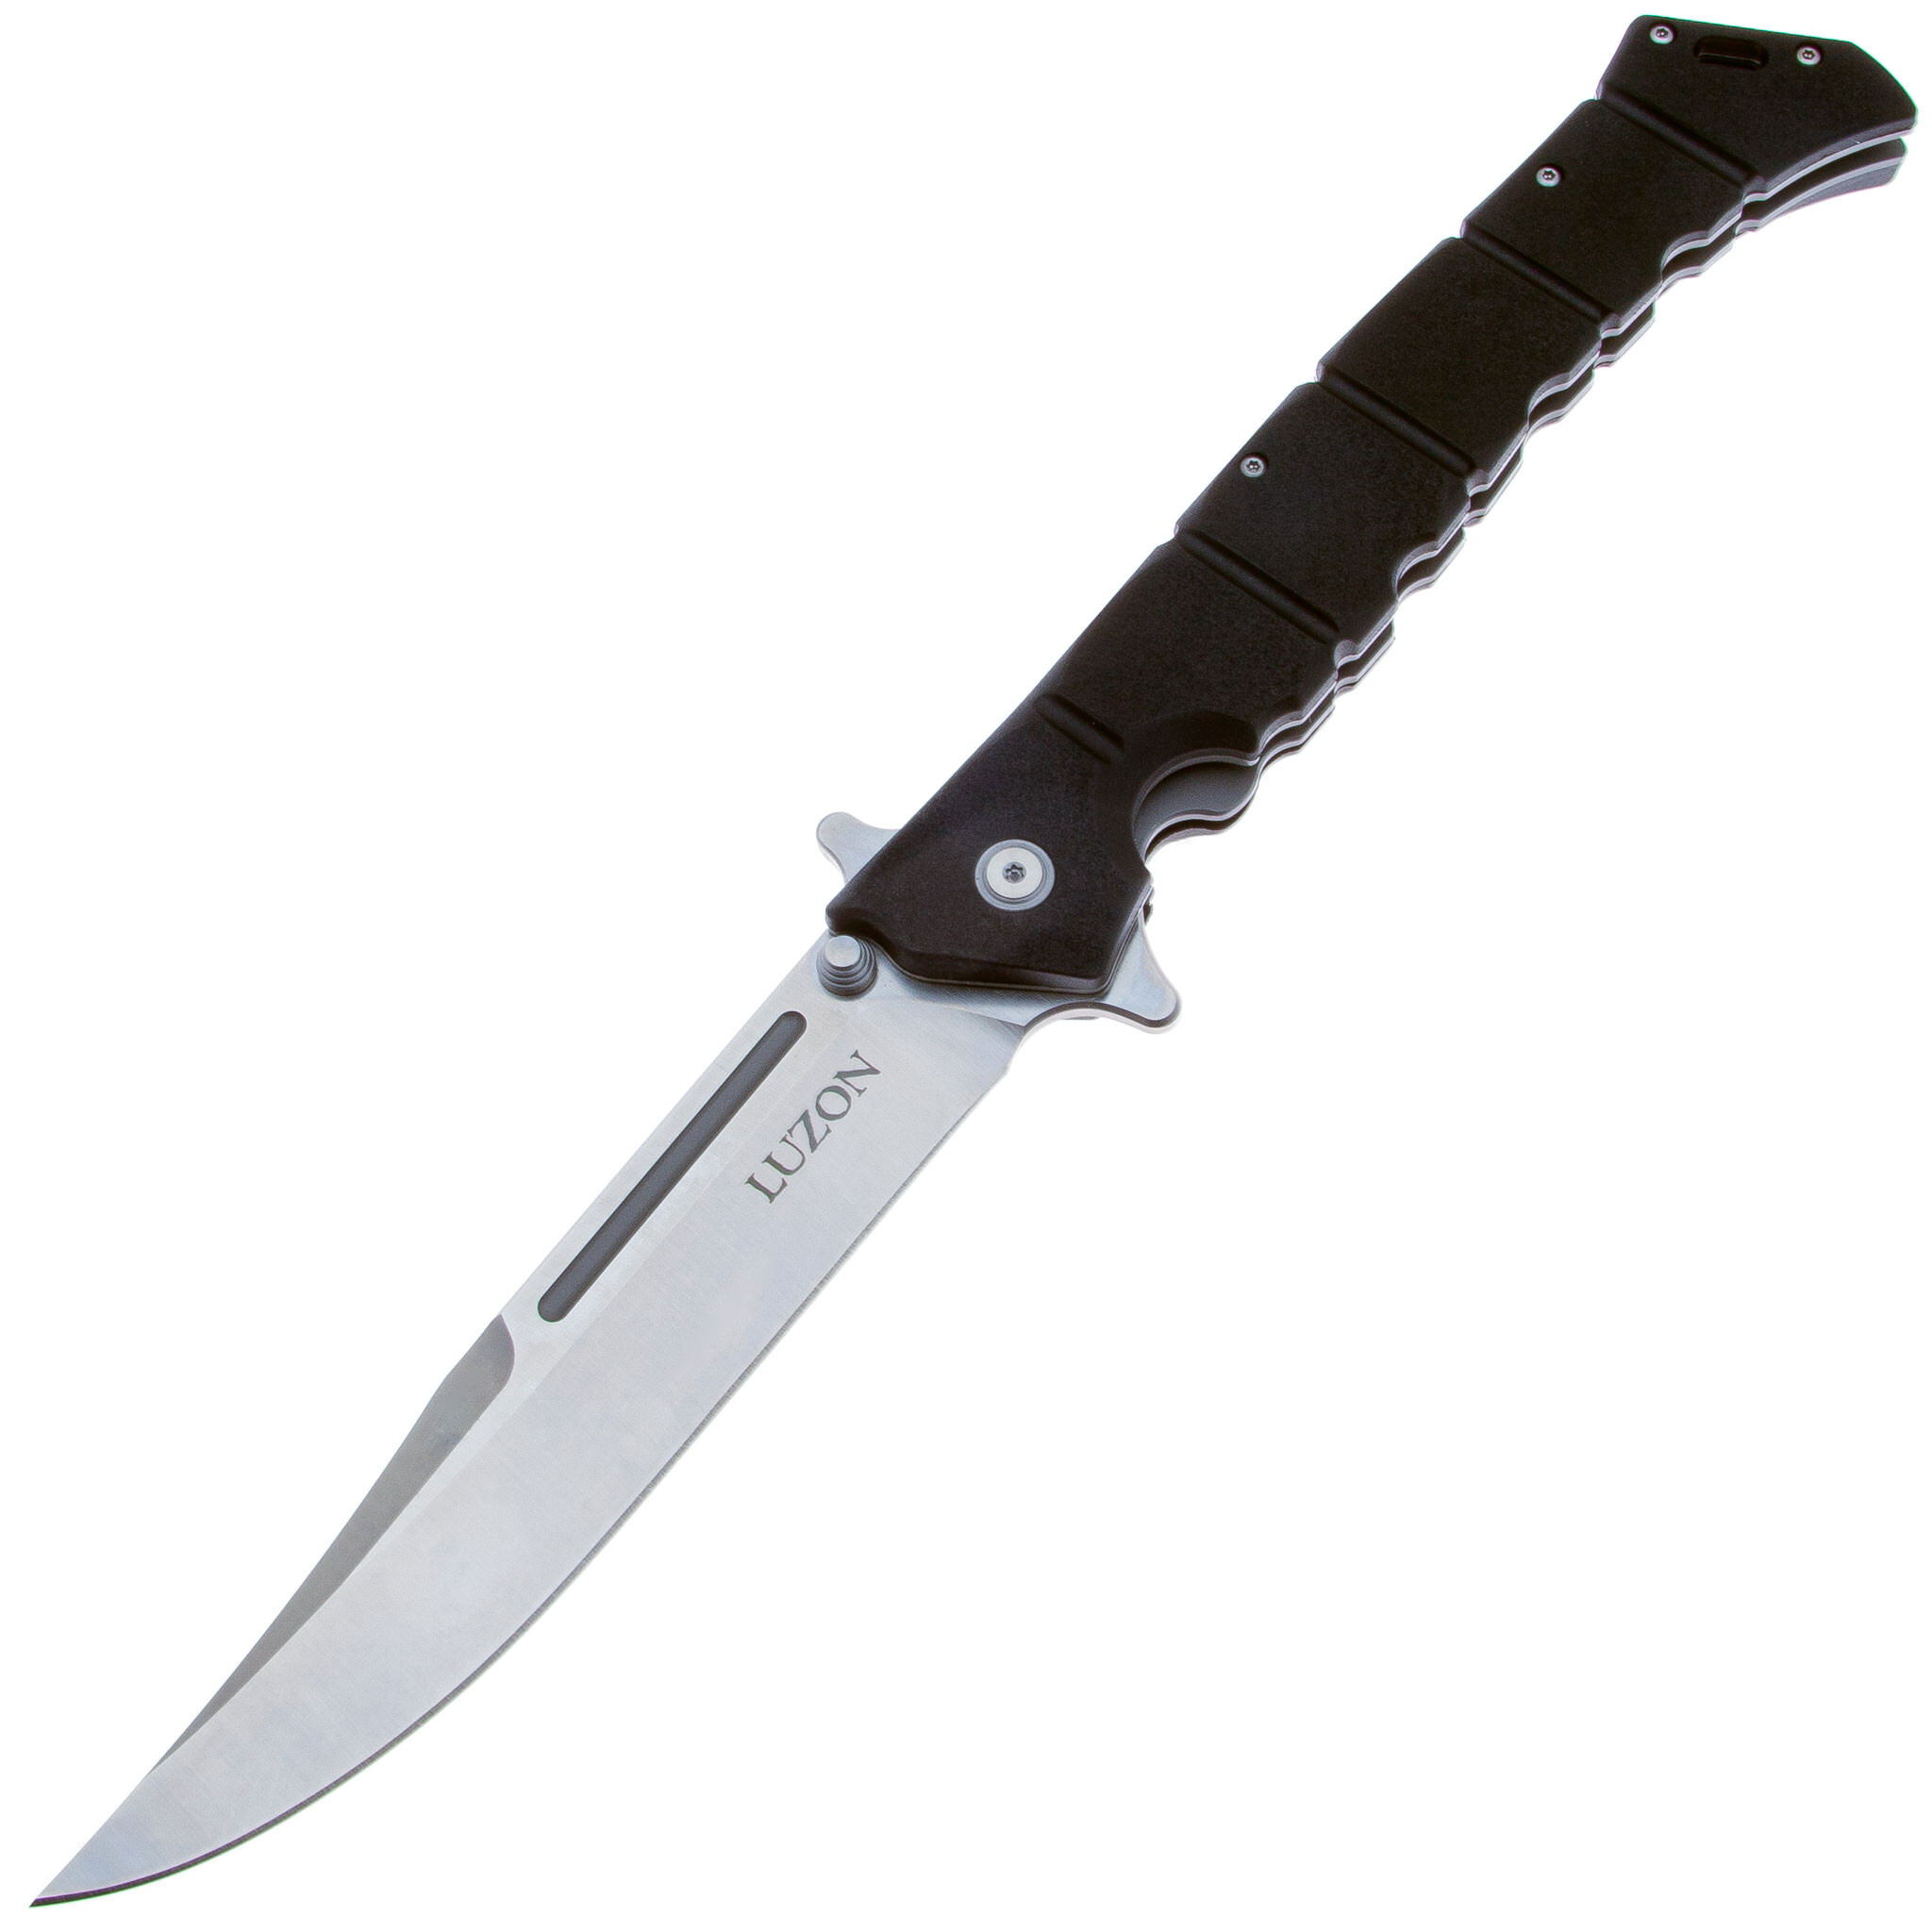 Складной нож Luzon (Large) - Cold Steel 20NQX, сталь 8Cr13MoV, рукоять GFN (термопластик)